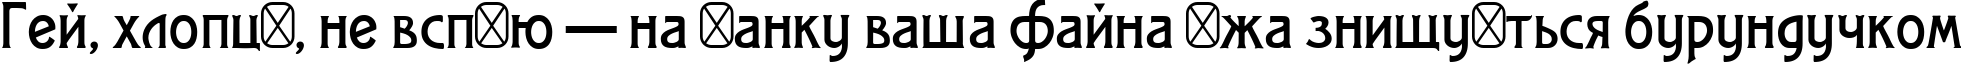 Пример написания шрифтом Modernist One текста на украинском